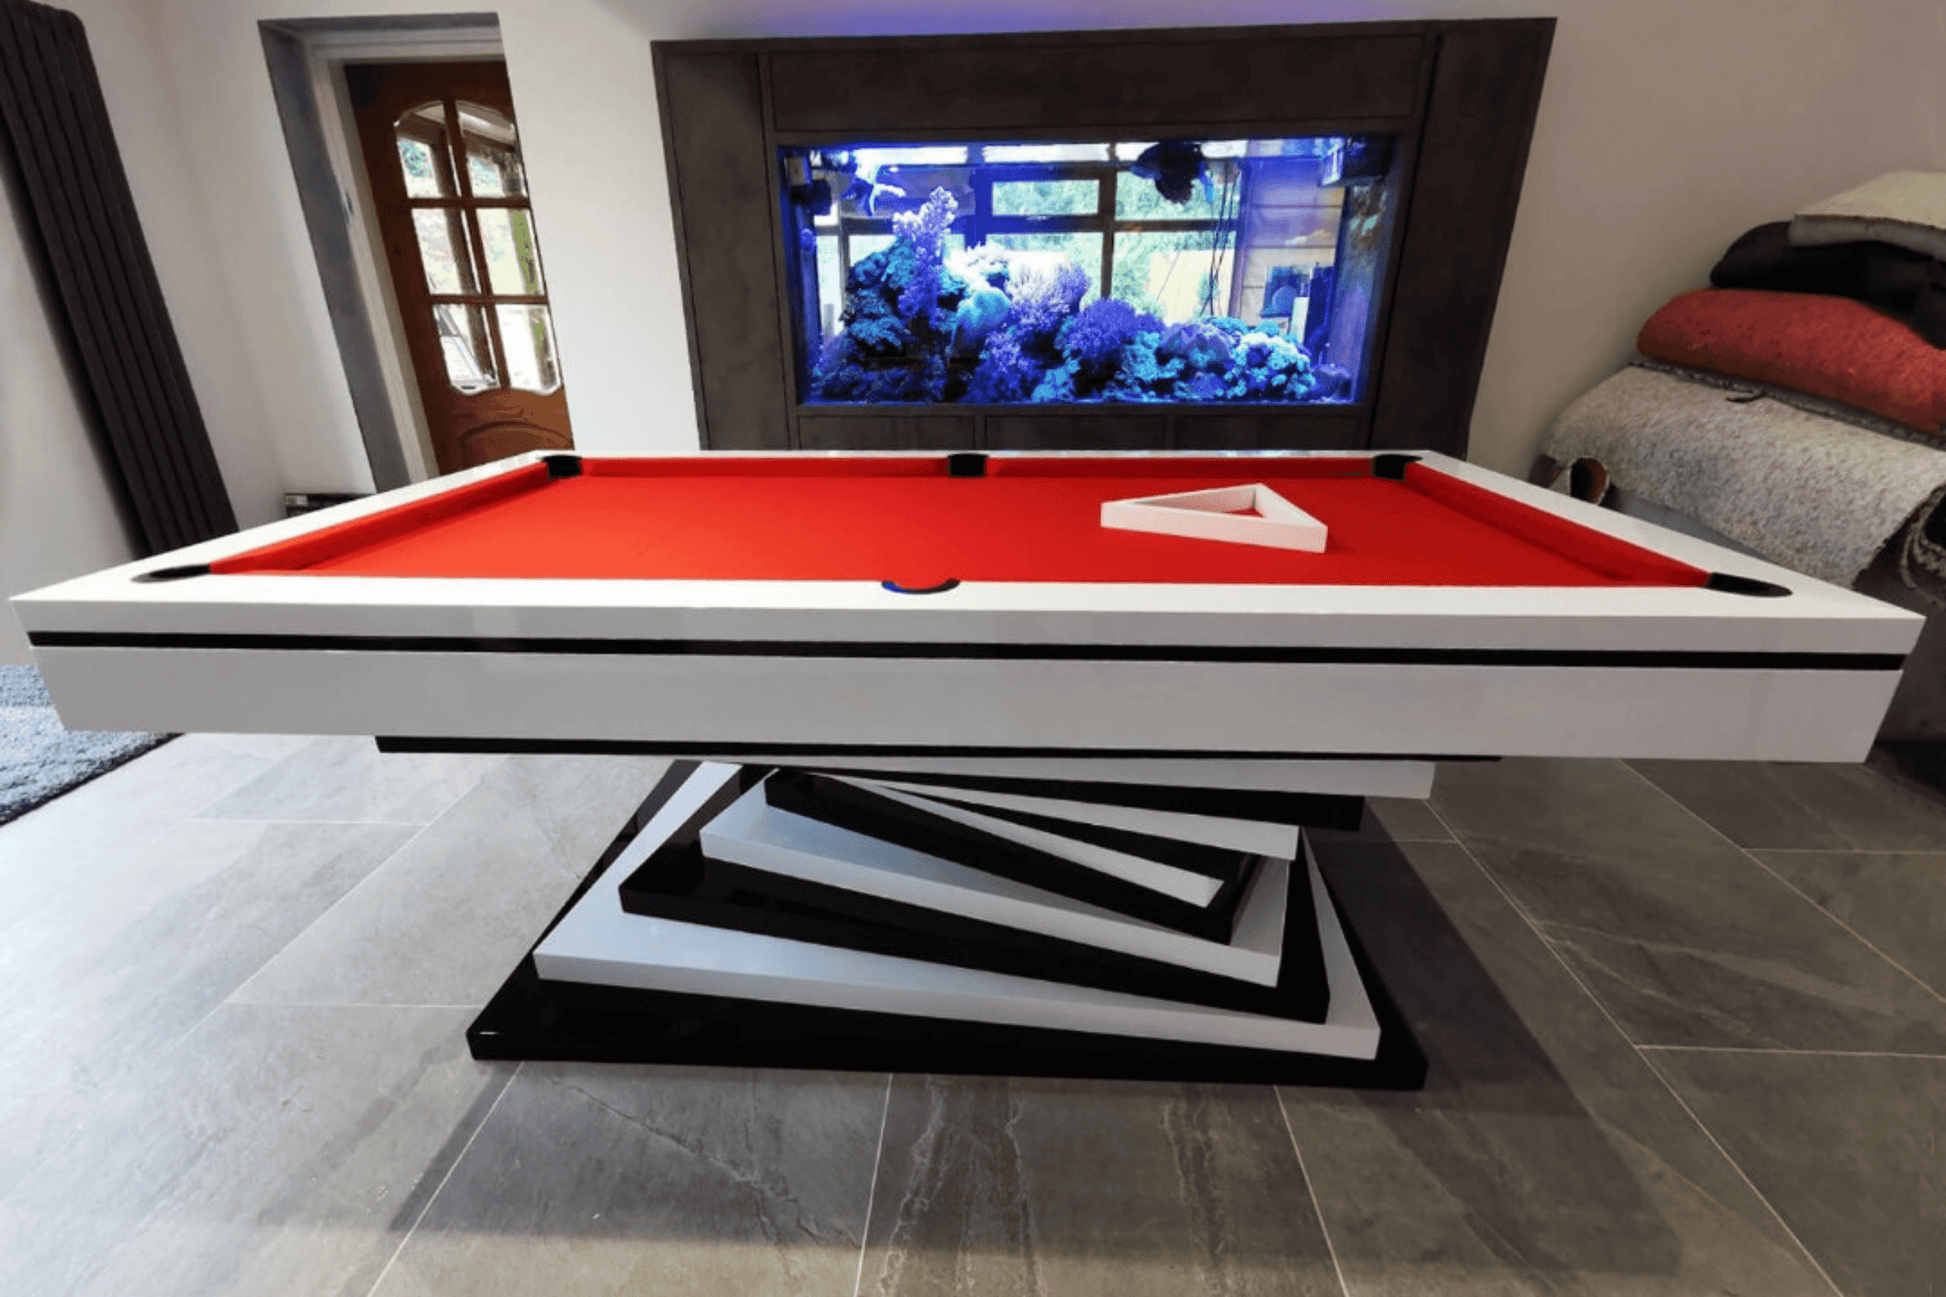 Table snooker billiards table indoor or outdoor luxury design CHE07 - Venini Furniture 